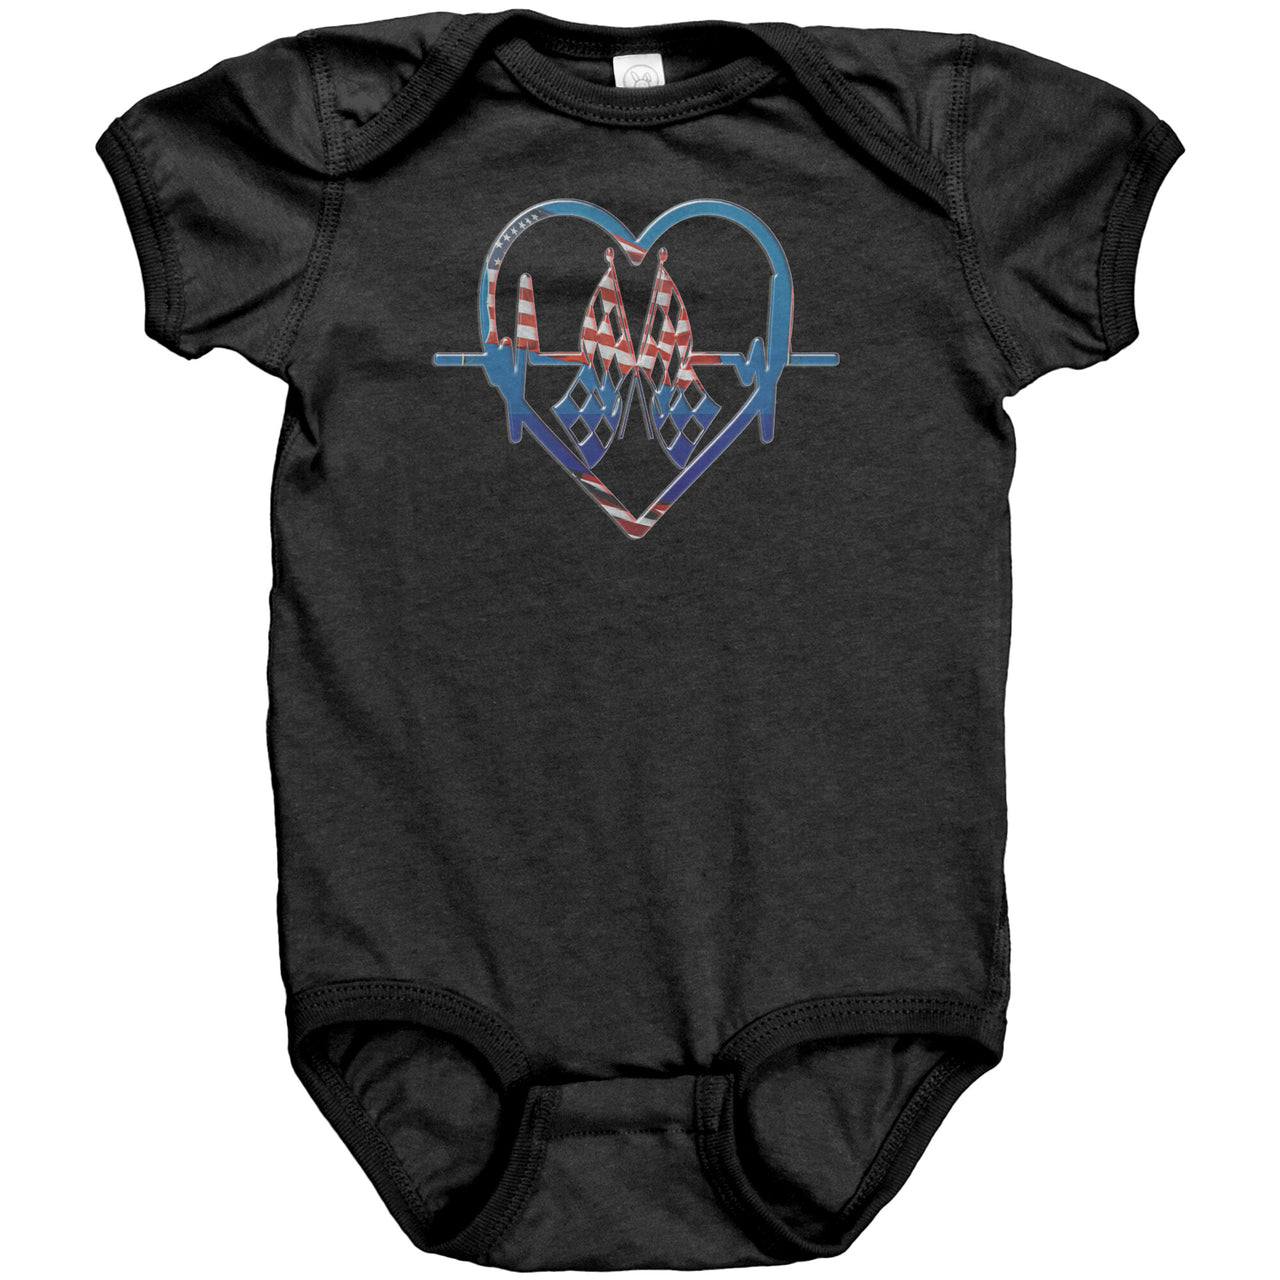 USA Racing Heartbeat Baby T-Shirts